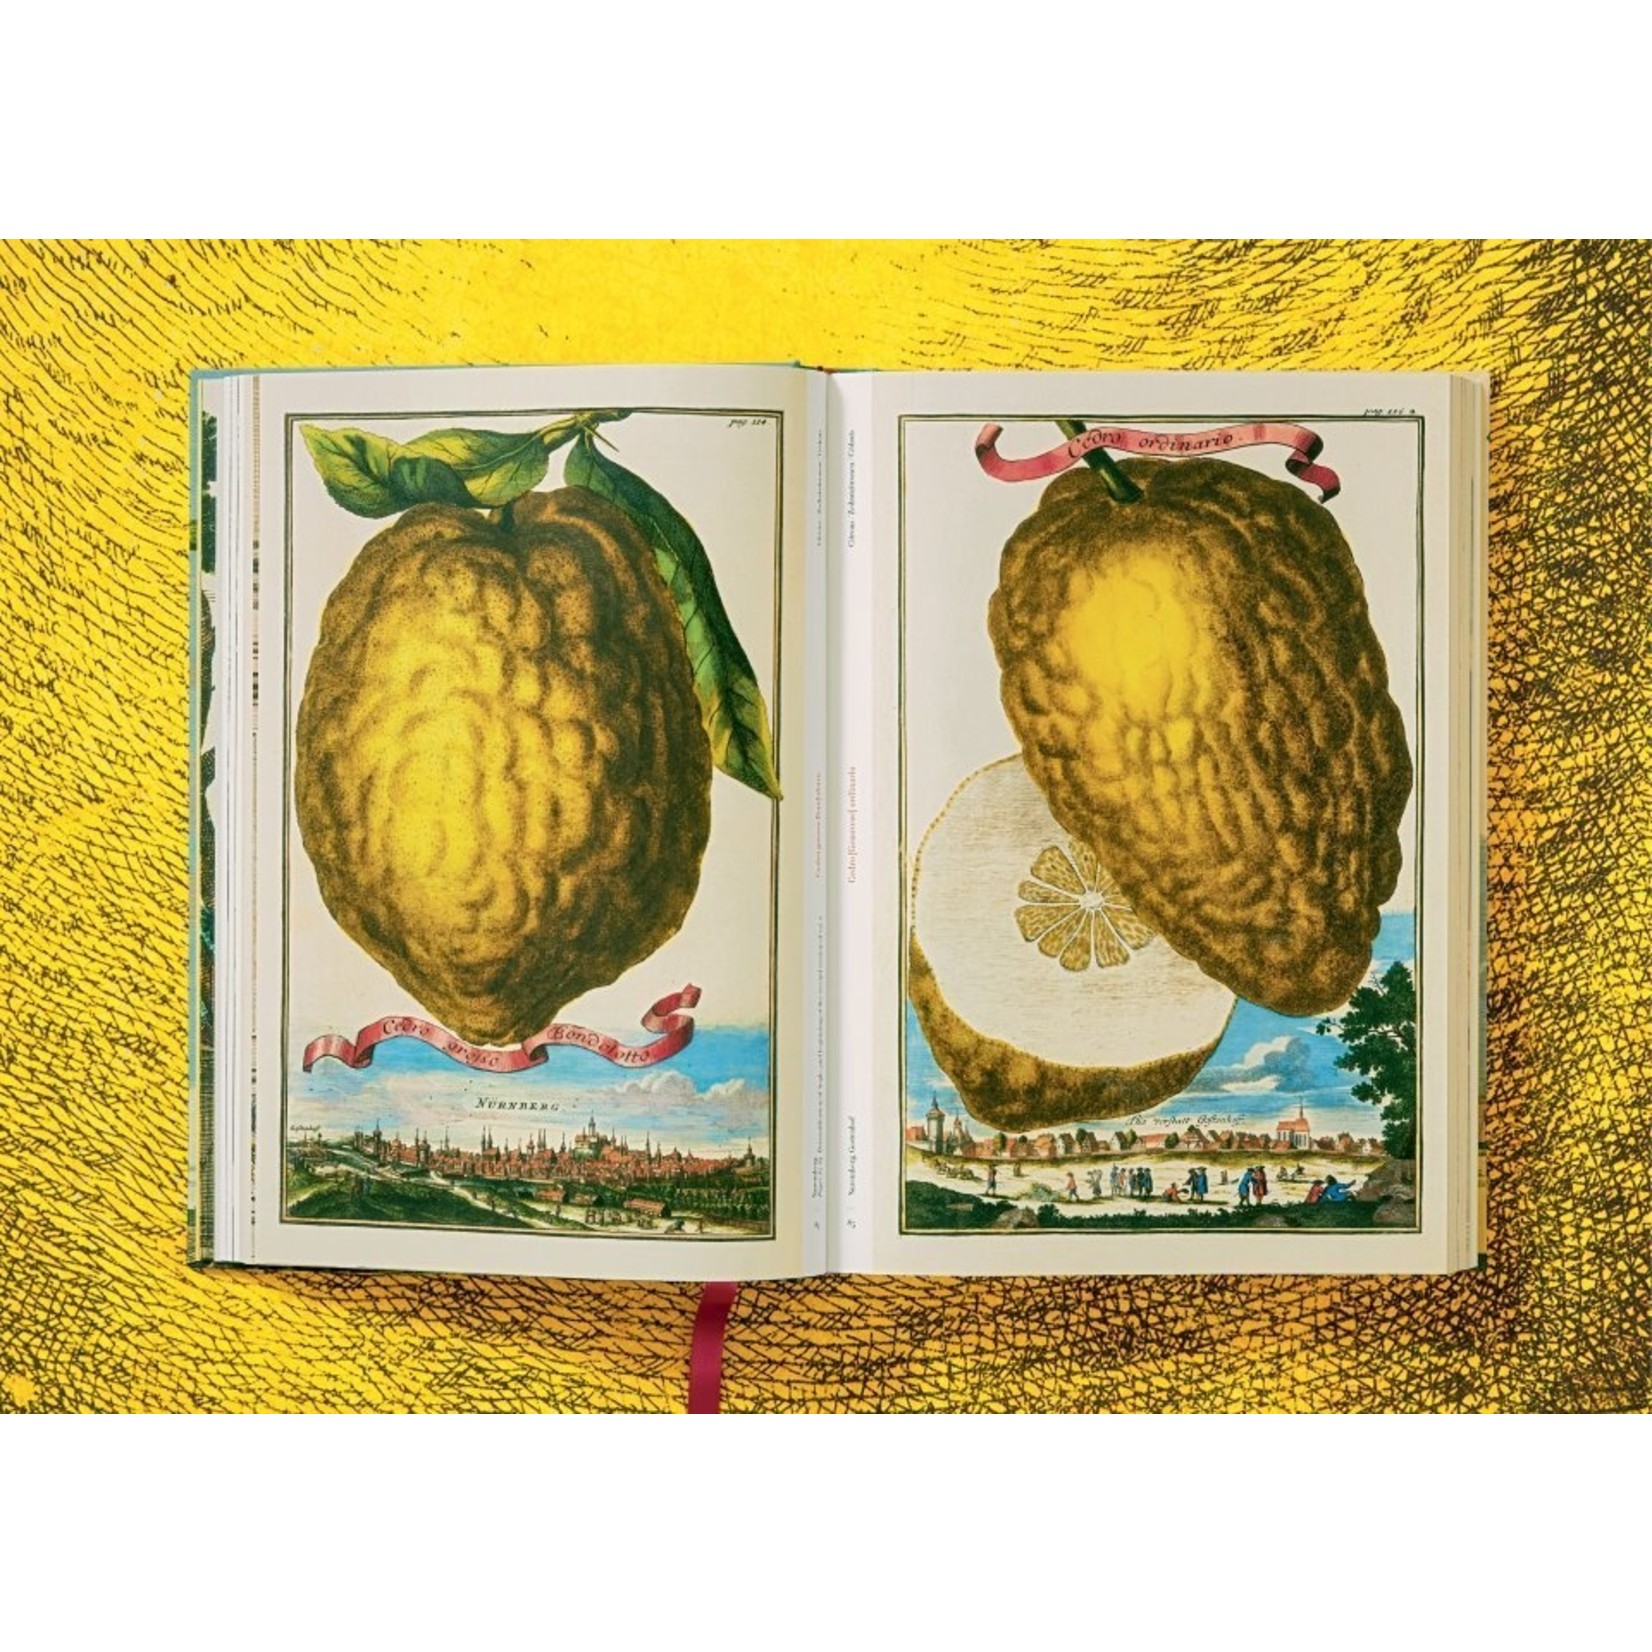 The Book of Citrus